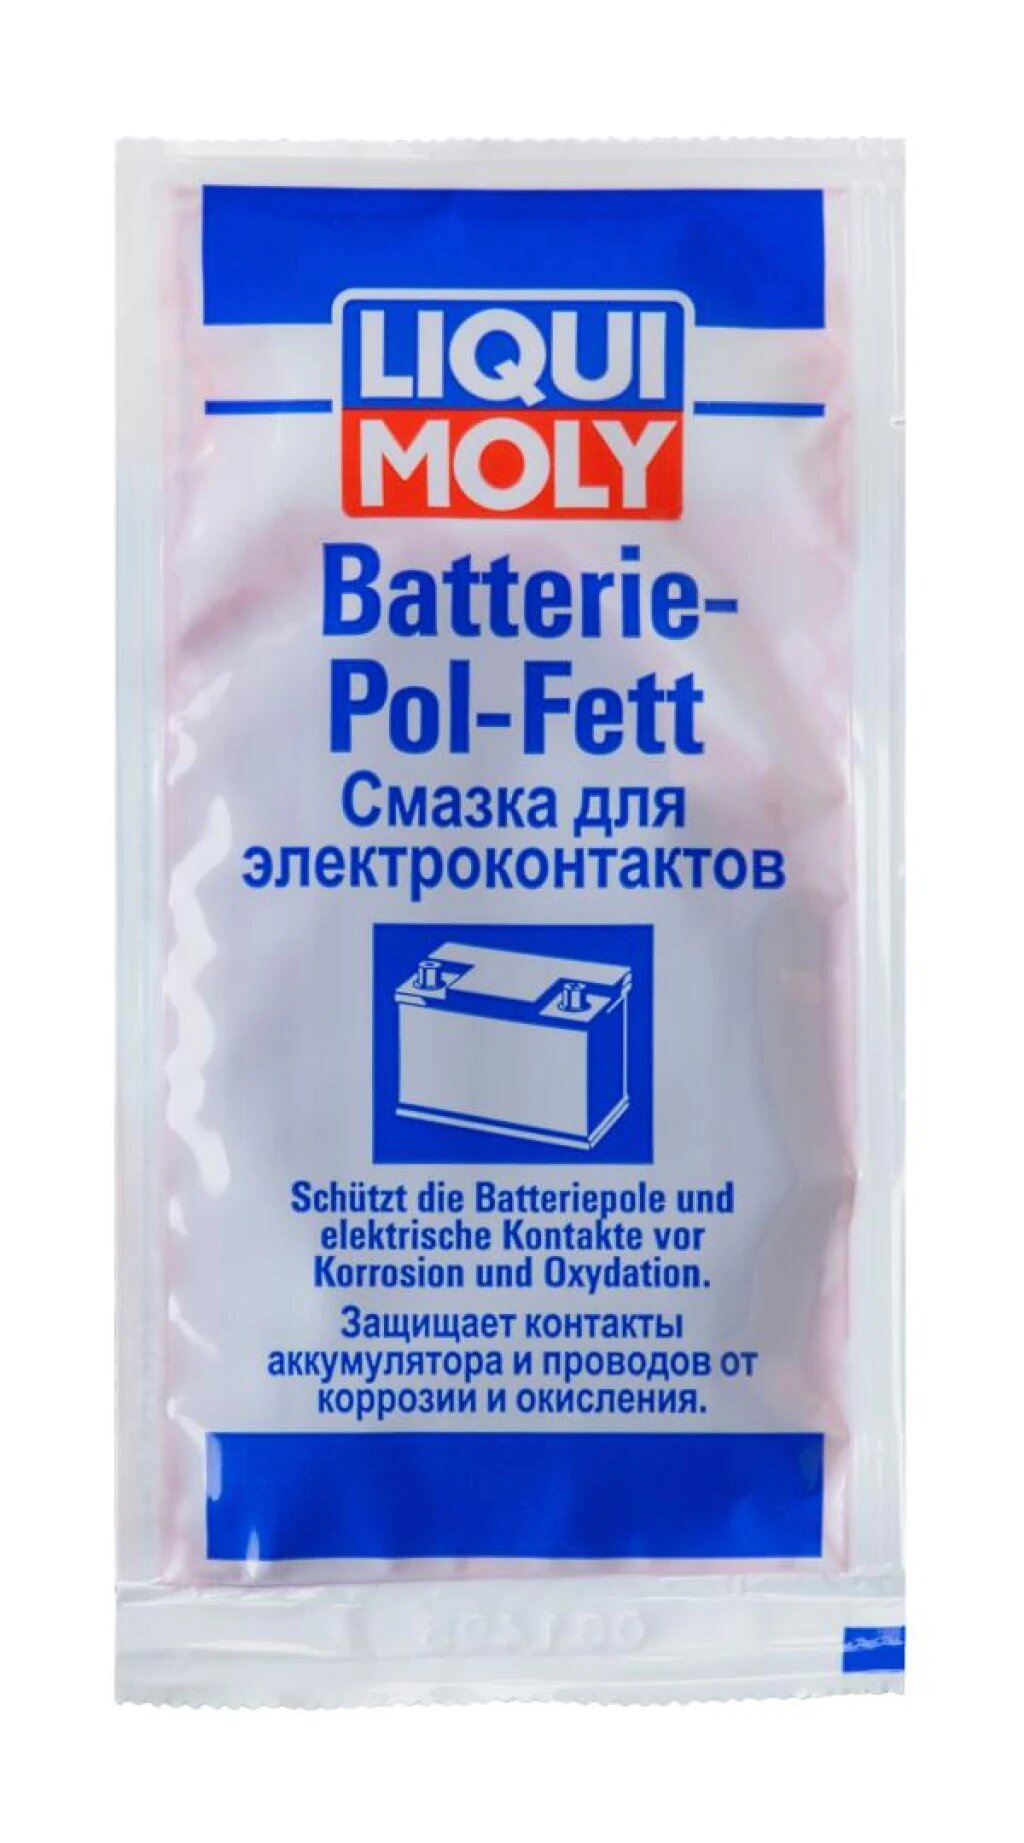 LIQUI MOLY LiquiMoly Смазка д/электроконтактов Batterie-Pol-Fett (0,01кг) 3139